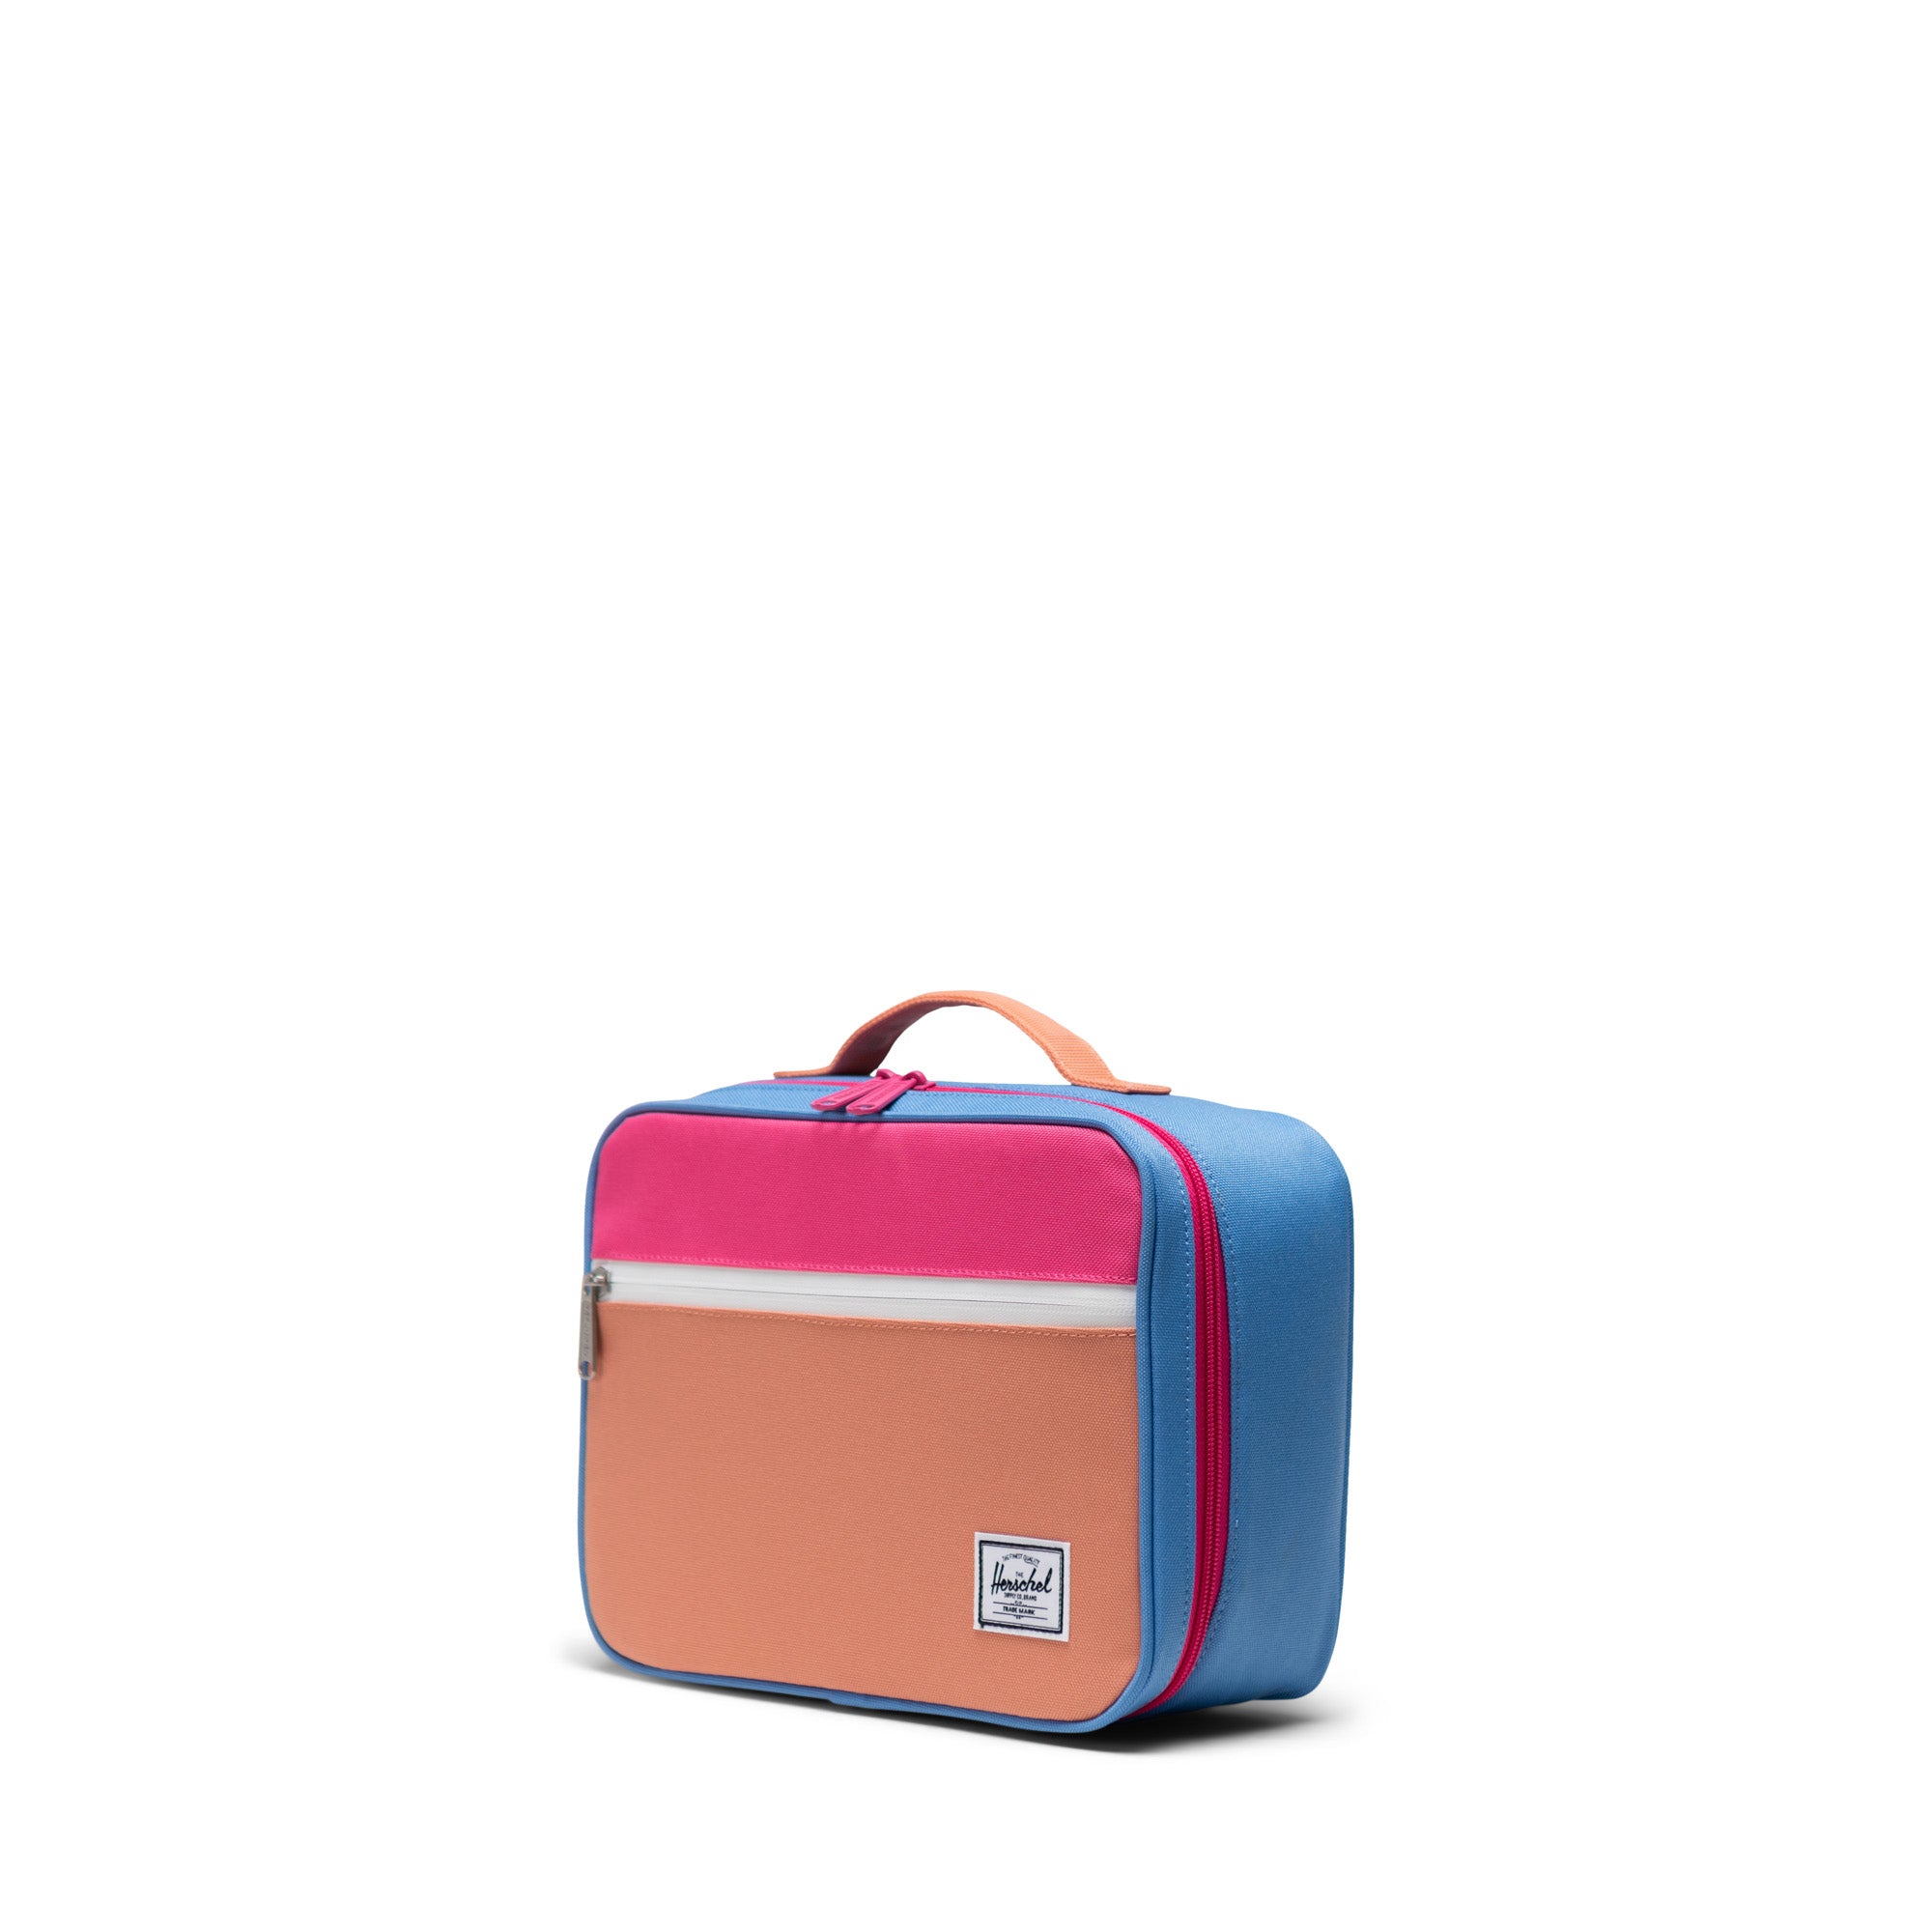 Herschel Supply Co. | Pop Quiz Lunch Box - Fandango Pink, Canyon Sunset & Provence